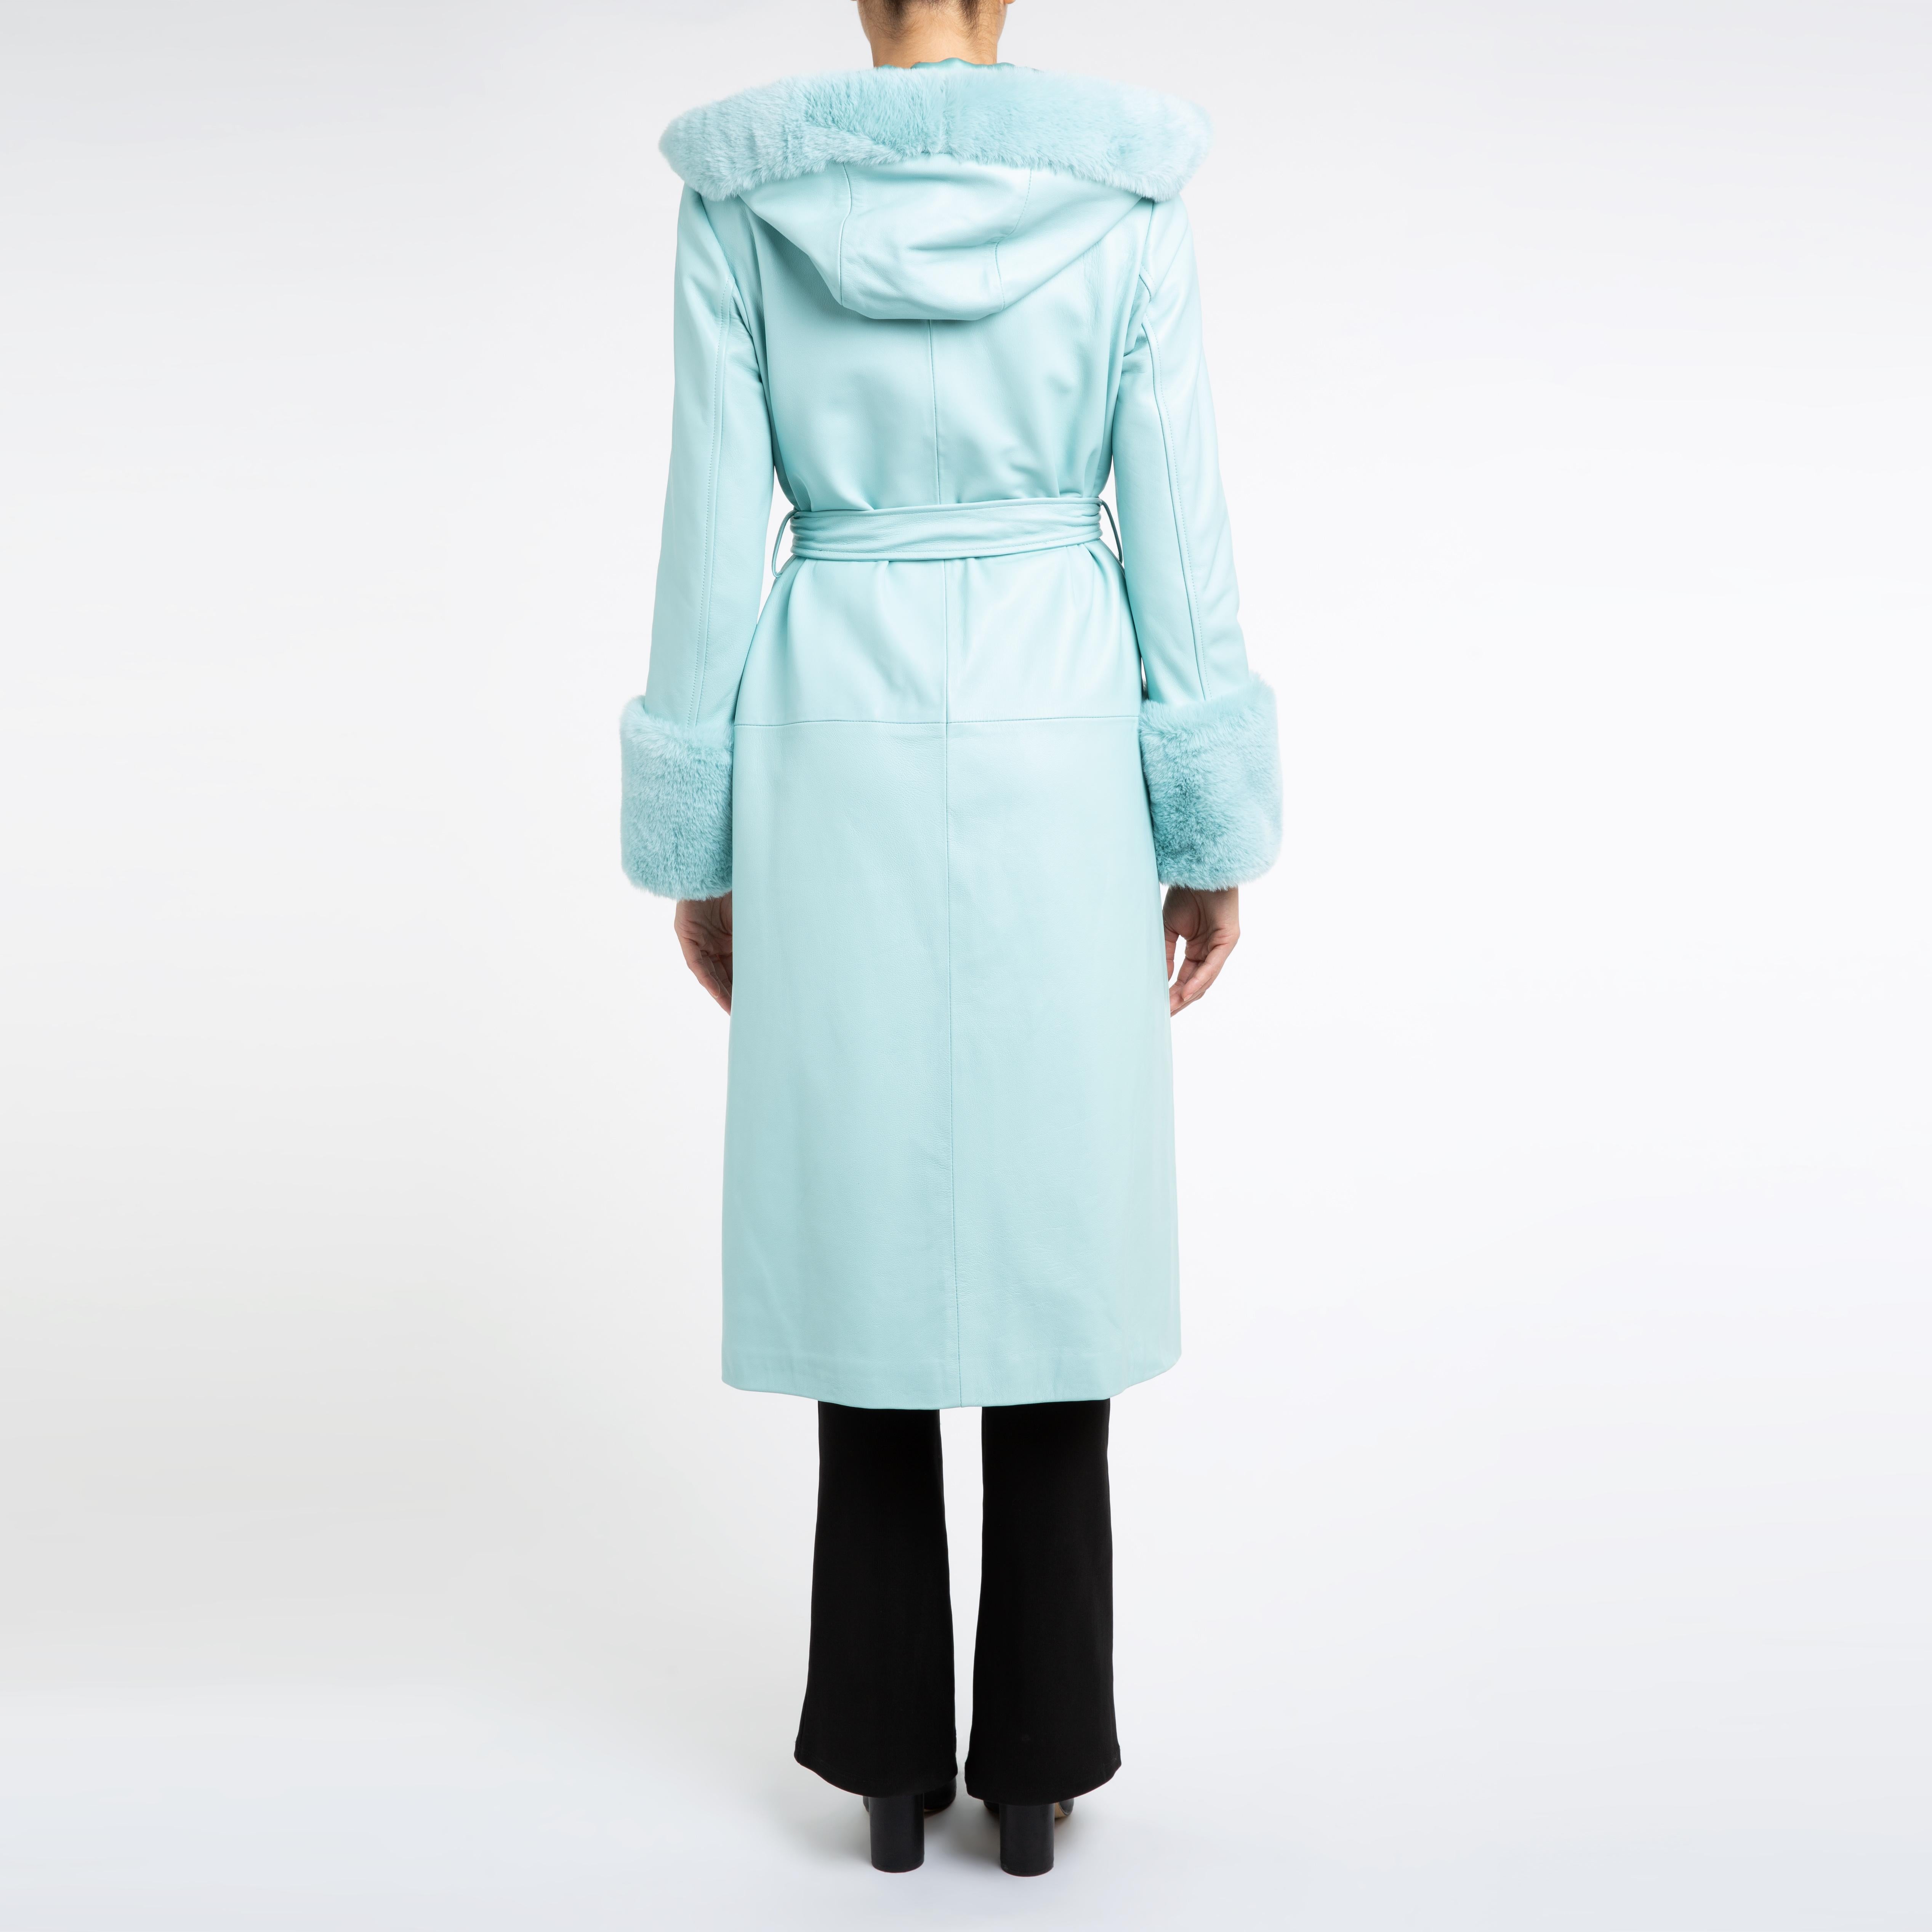 Verheyen London Hooded Leather Coat in Blue Aquamarine & Faux Fur - Size uk 10 For Sale 1